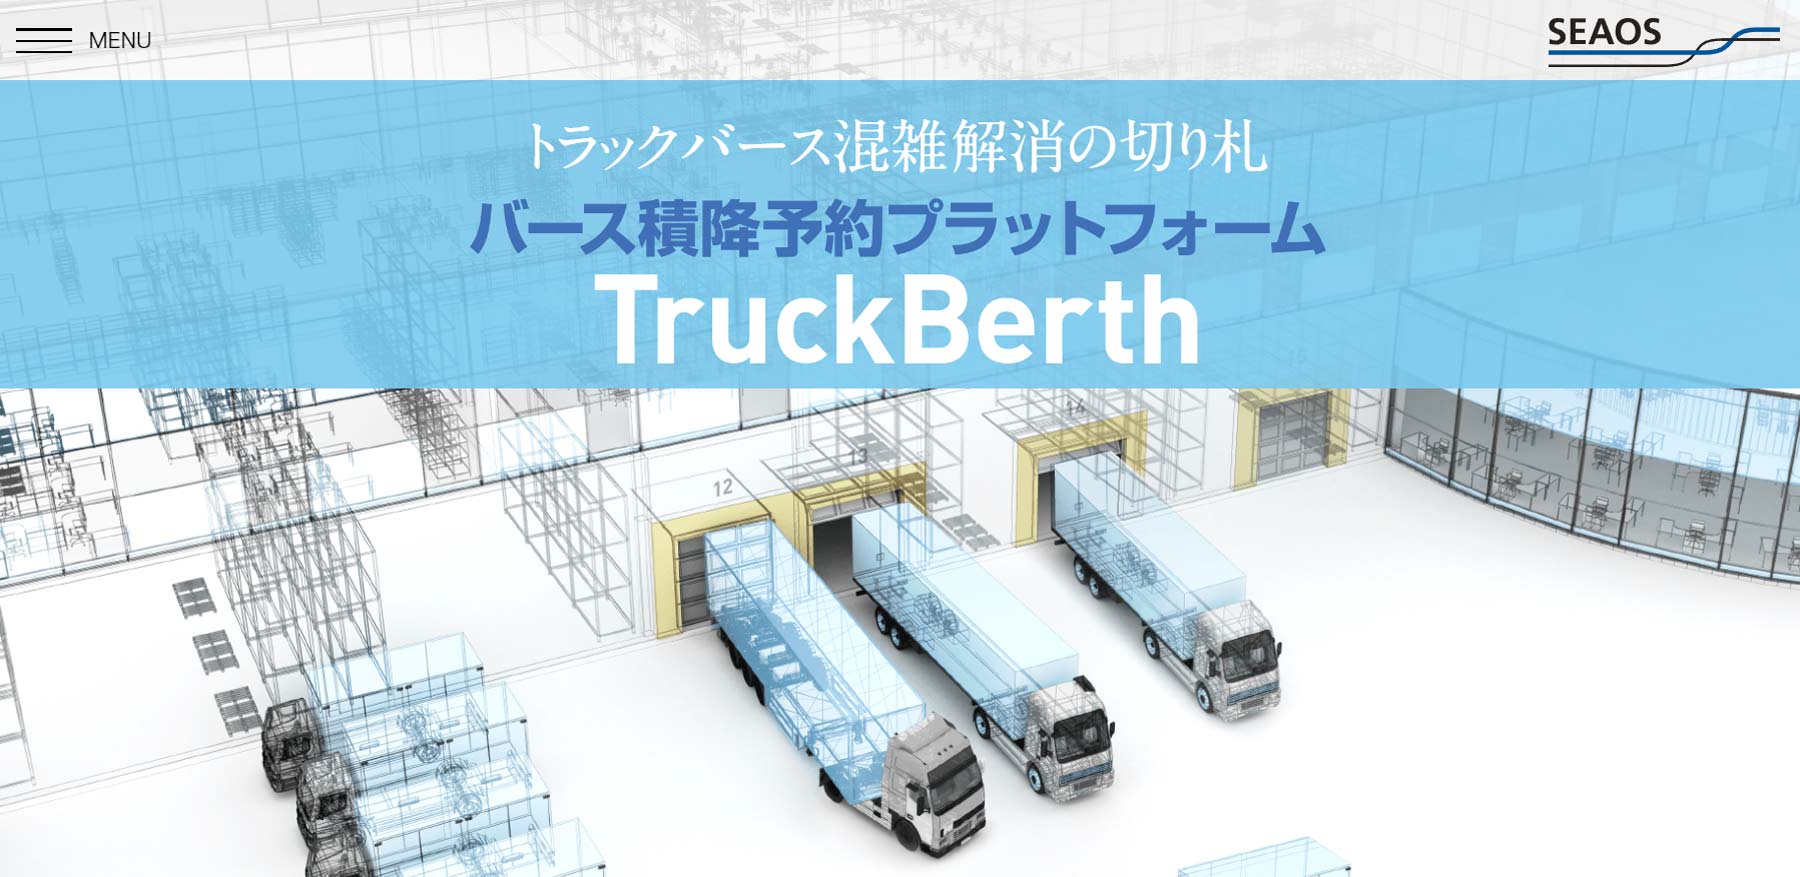 TruckBerth公式Webサイト